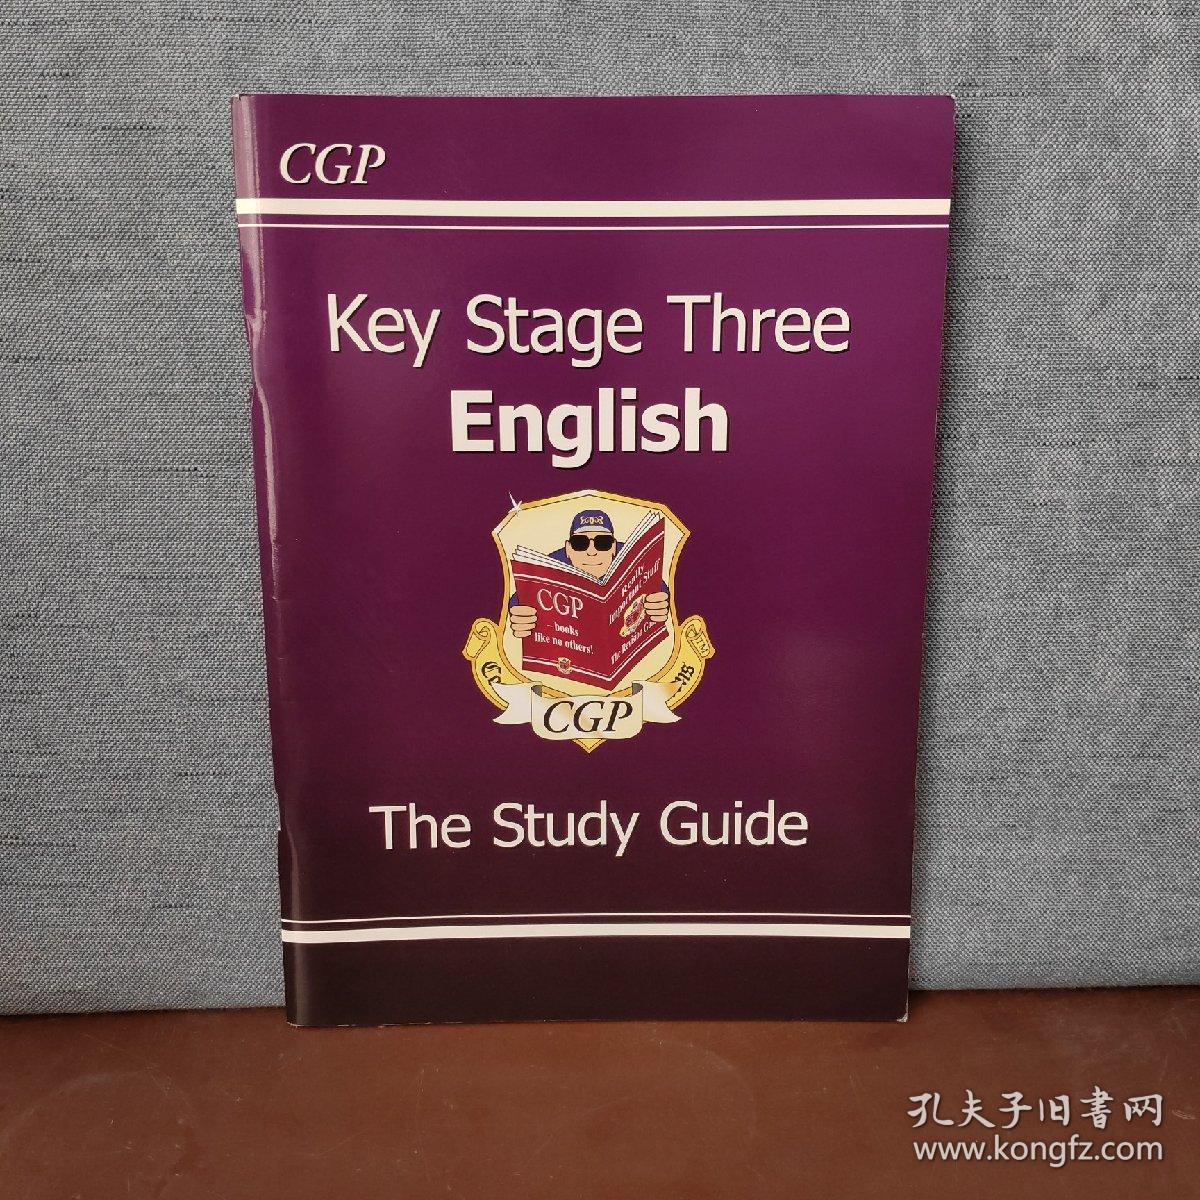 Ks3 English Study Guide